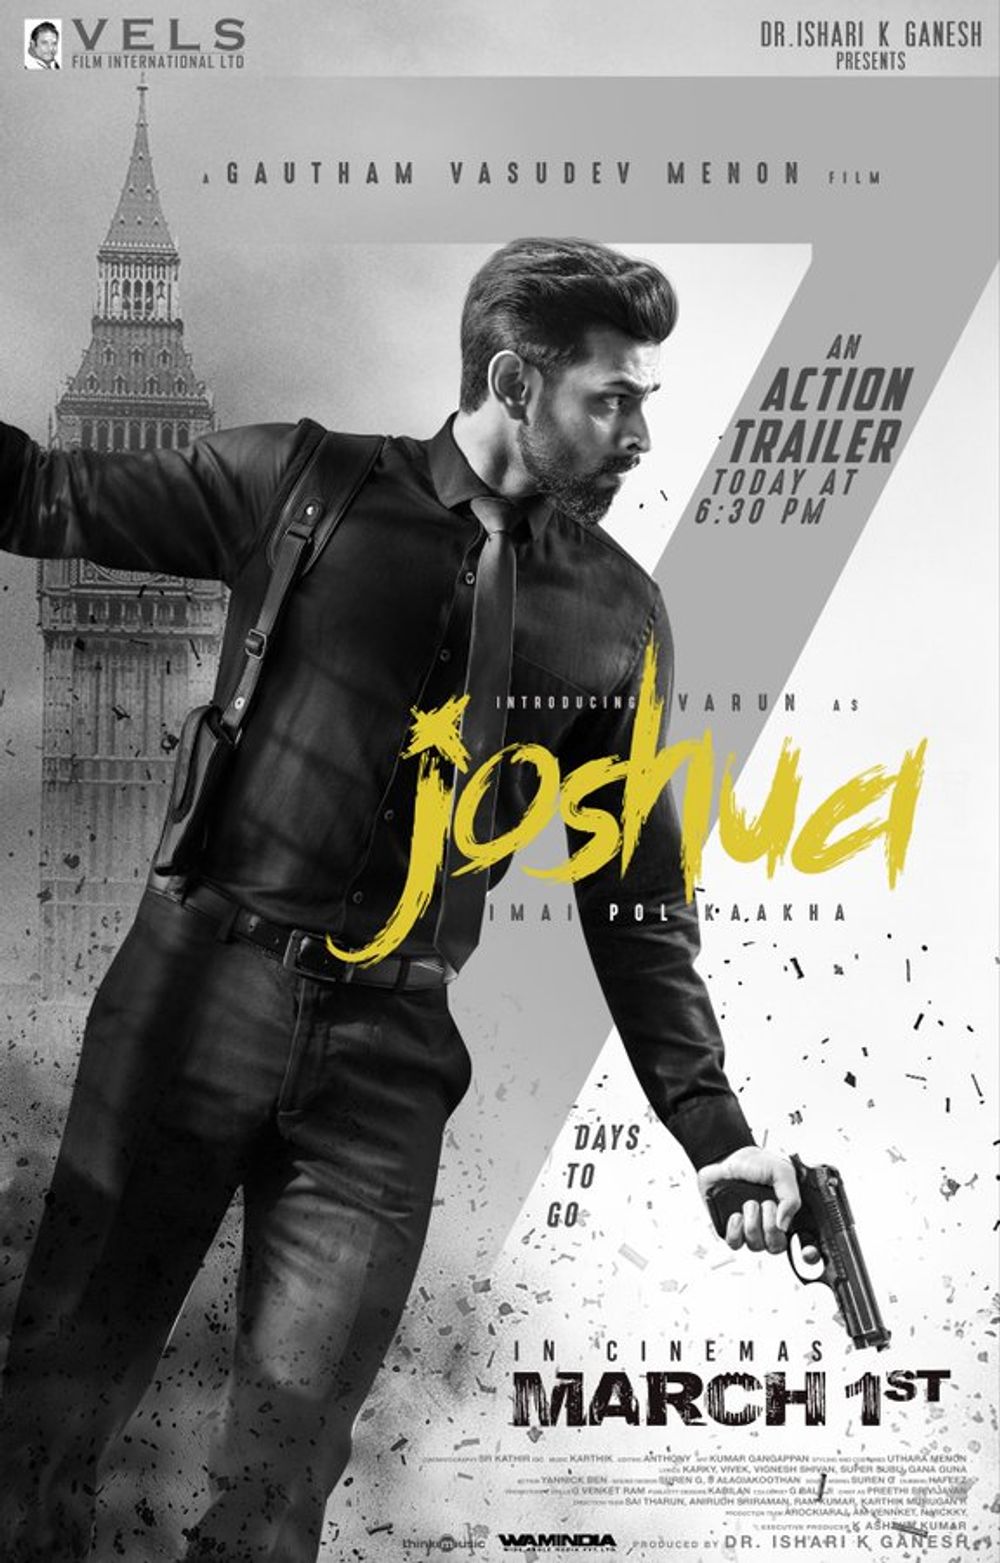 Joshua Imai Pol Kaakha Movie Review